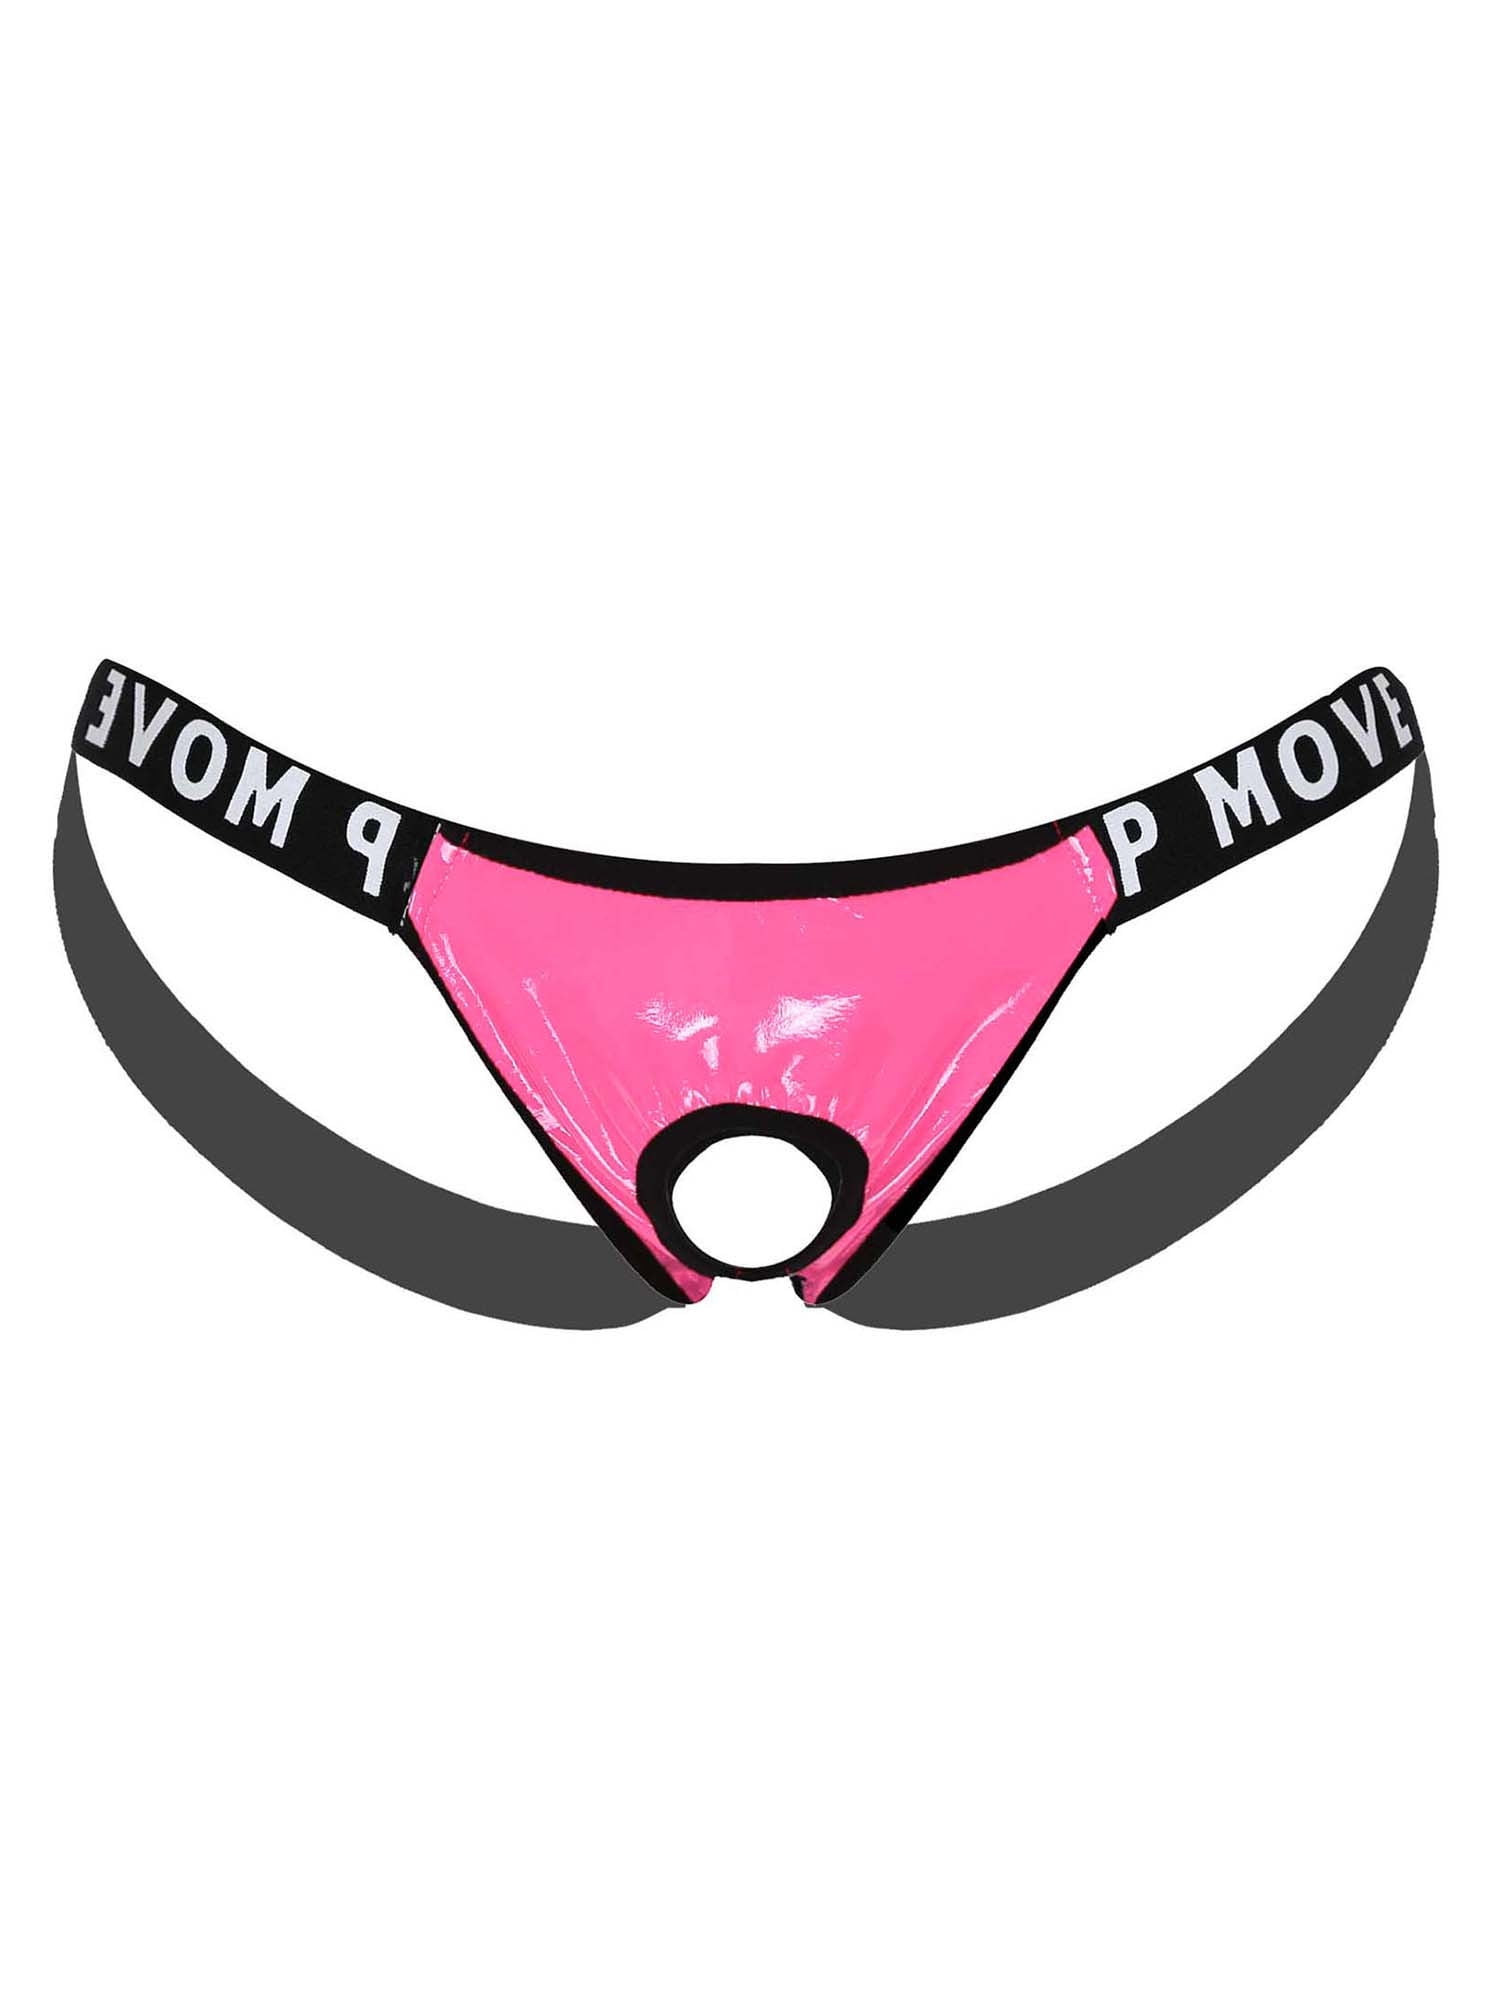 YIZYIF Mens Patent Leather Underwear Hollow Out Bulge Pouch Latex Panties  Jockstrap T-Back Thongs Pink XXL